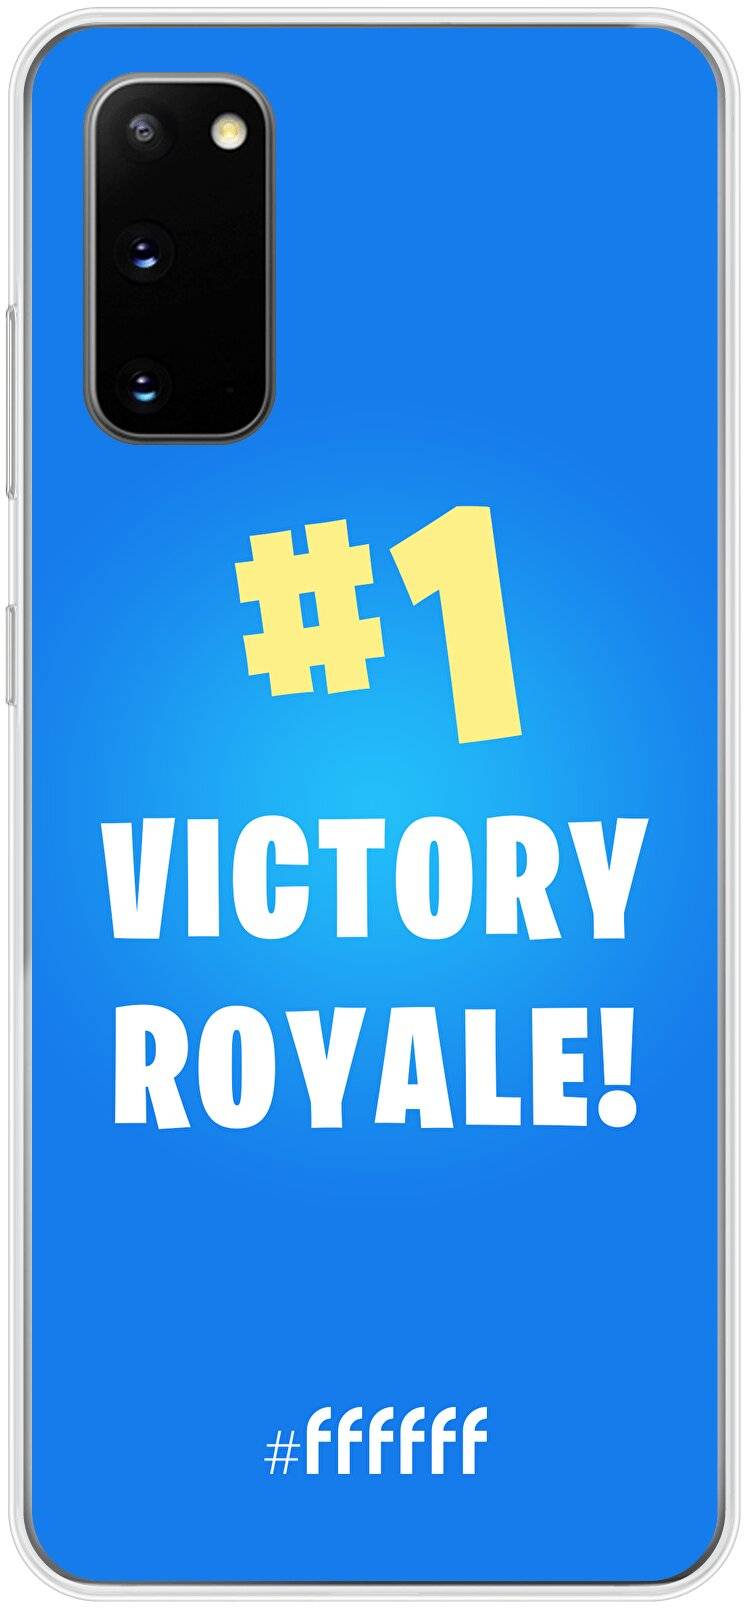 Battle Royale - Victory Royale Galaxy S20